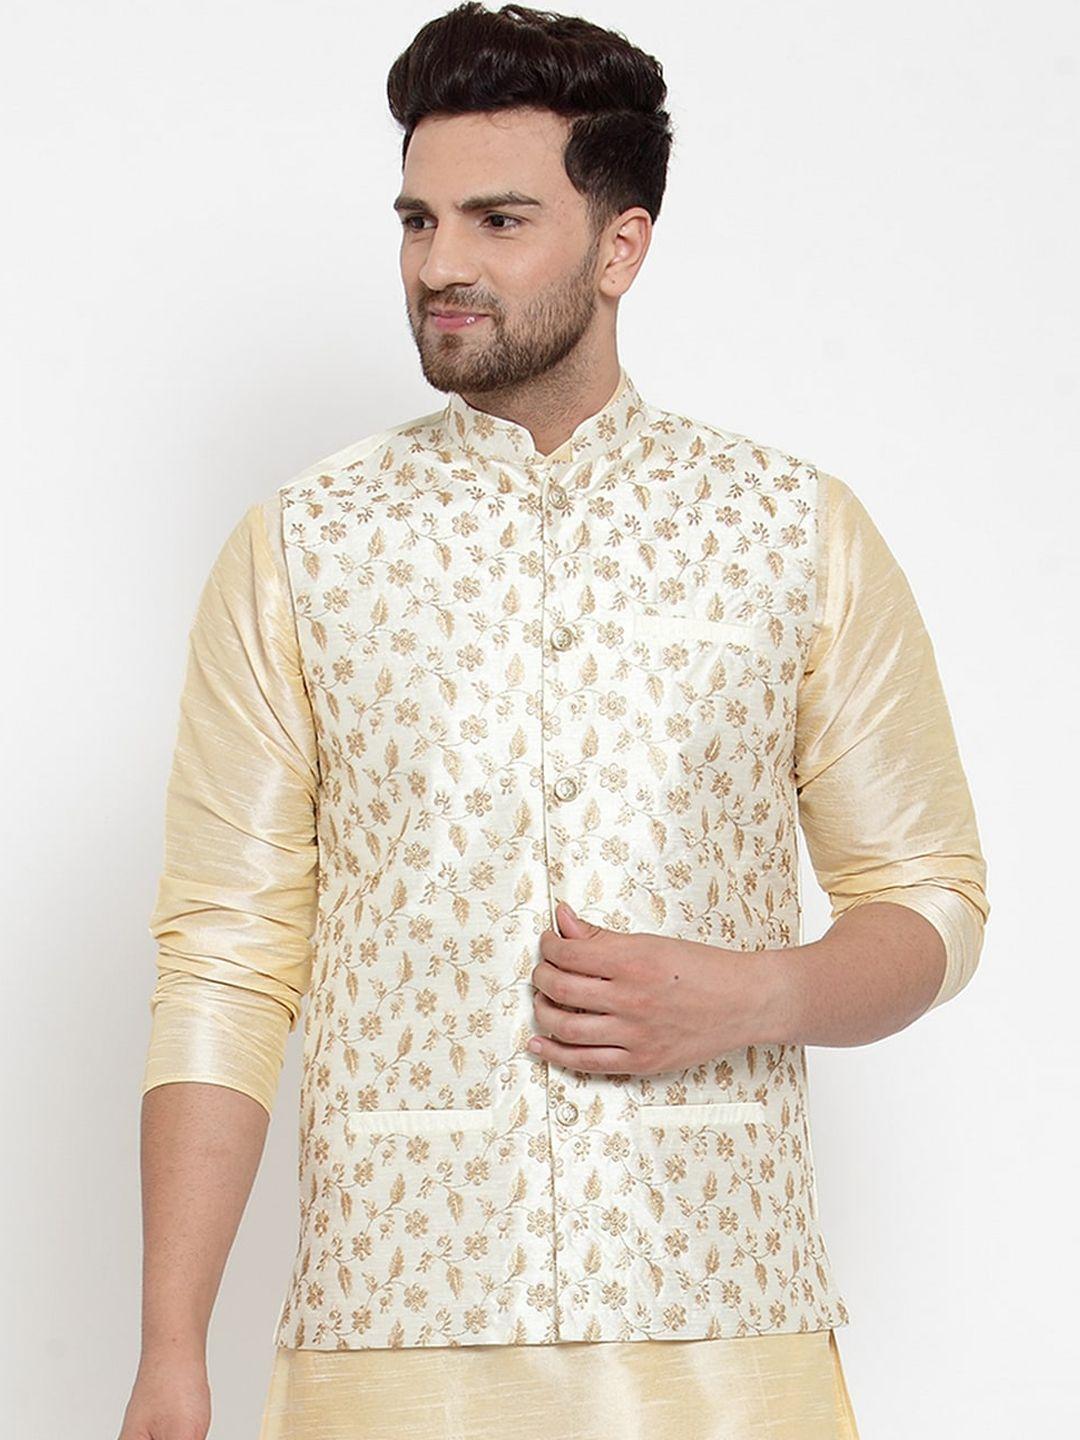 kraft-india-men-cream-coloured-&-gold-coloured-woven-embroidered-
nehru-jacket